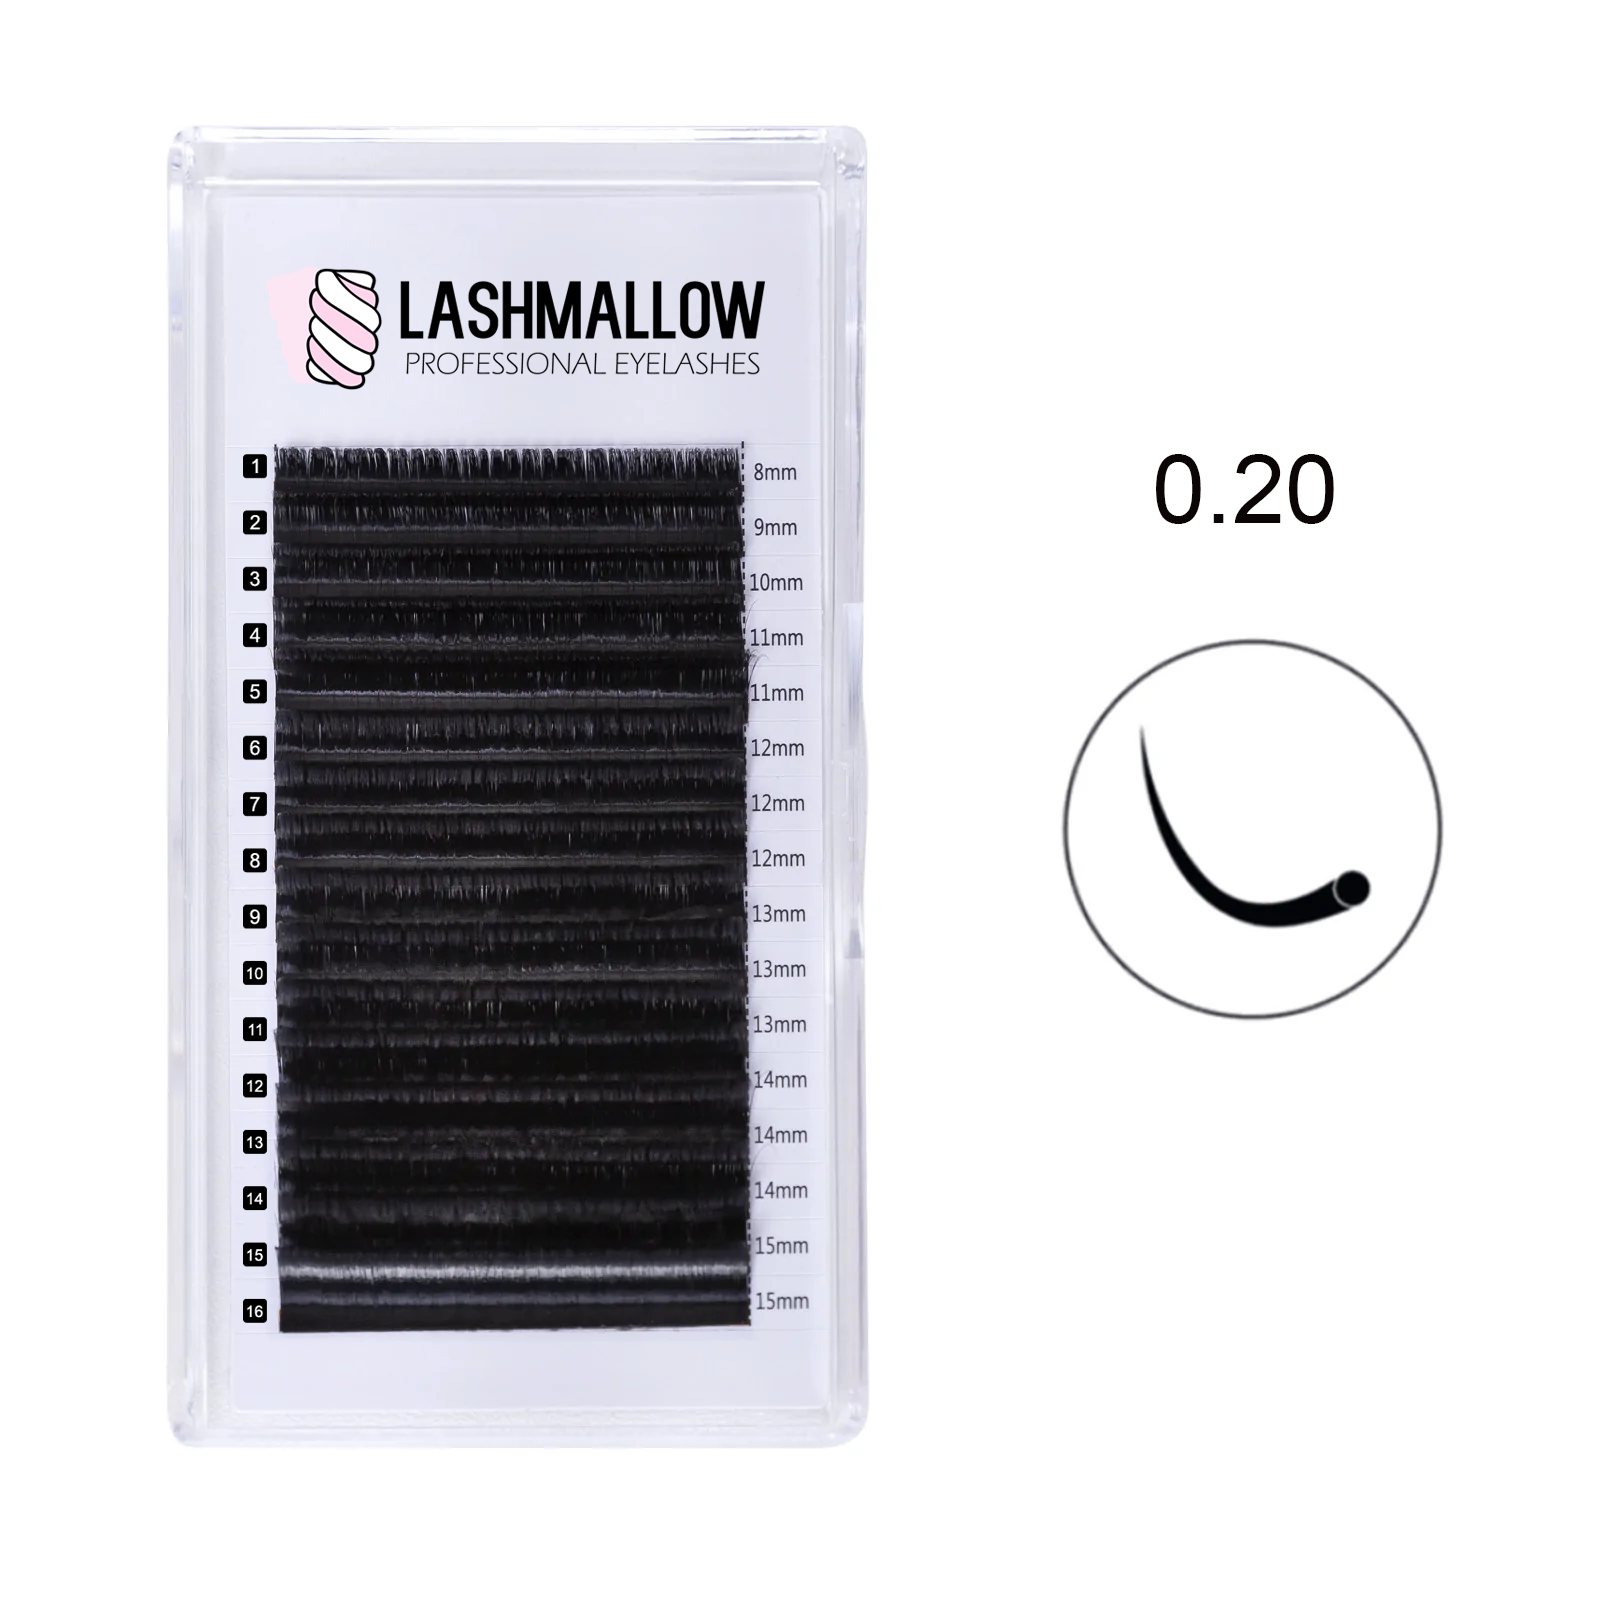 0.20 Premium Individual Classic Lashes 8-16mm Eyelash Extension Trays